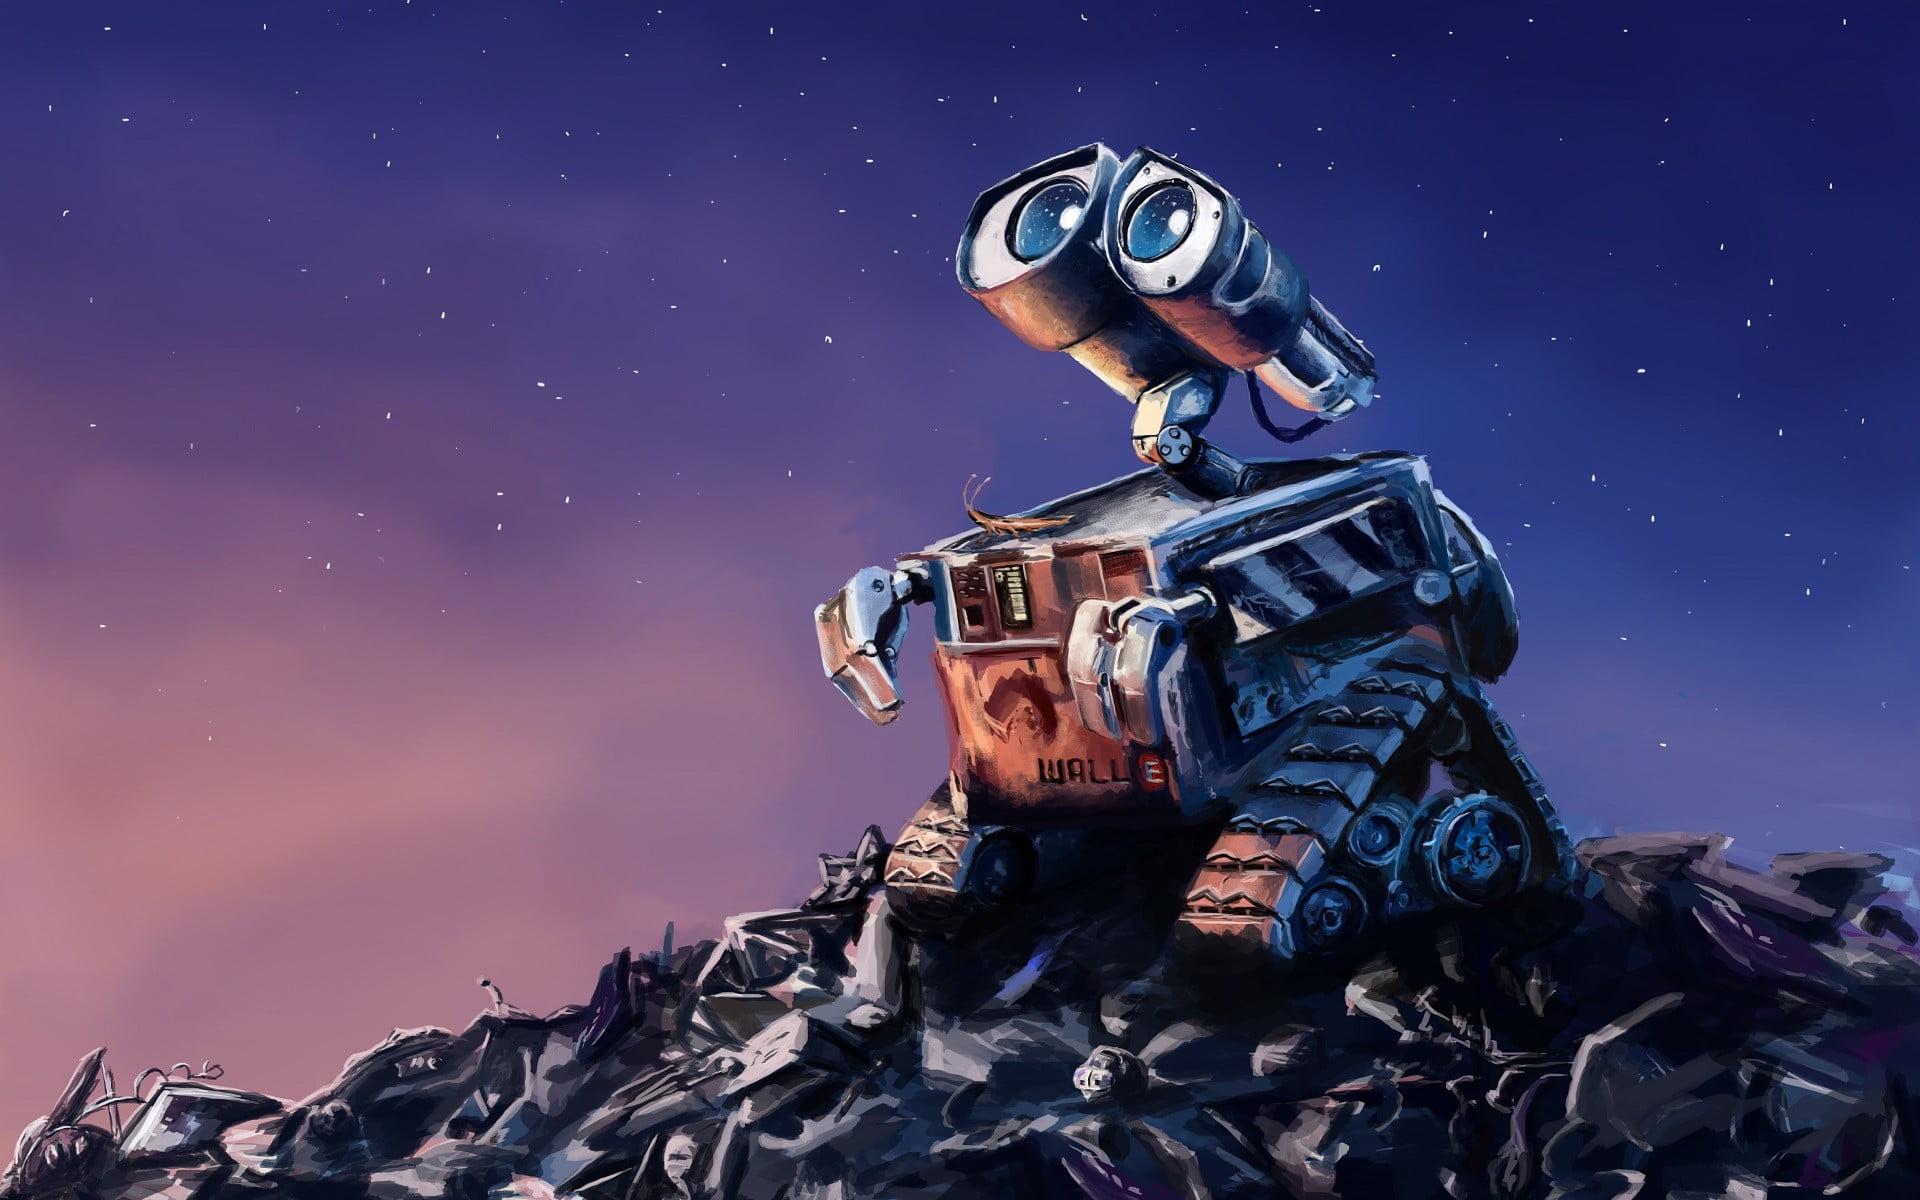 Wall E digital wallpaper, WALL·E, robot, movies, animation